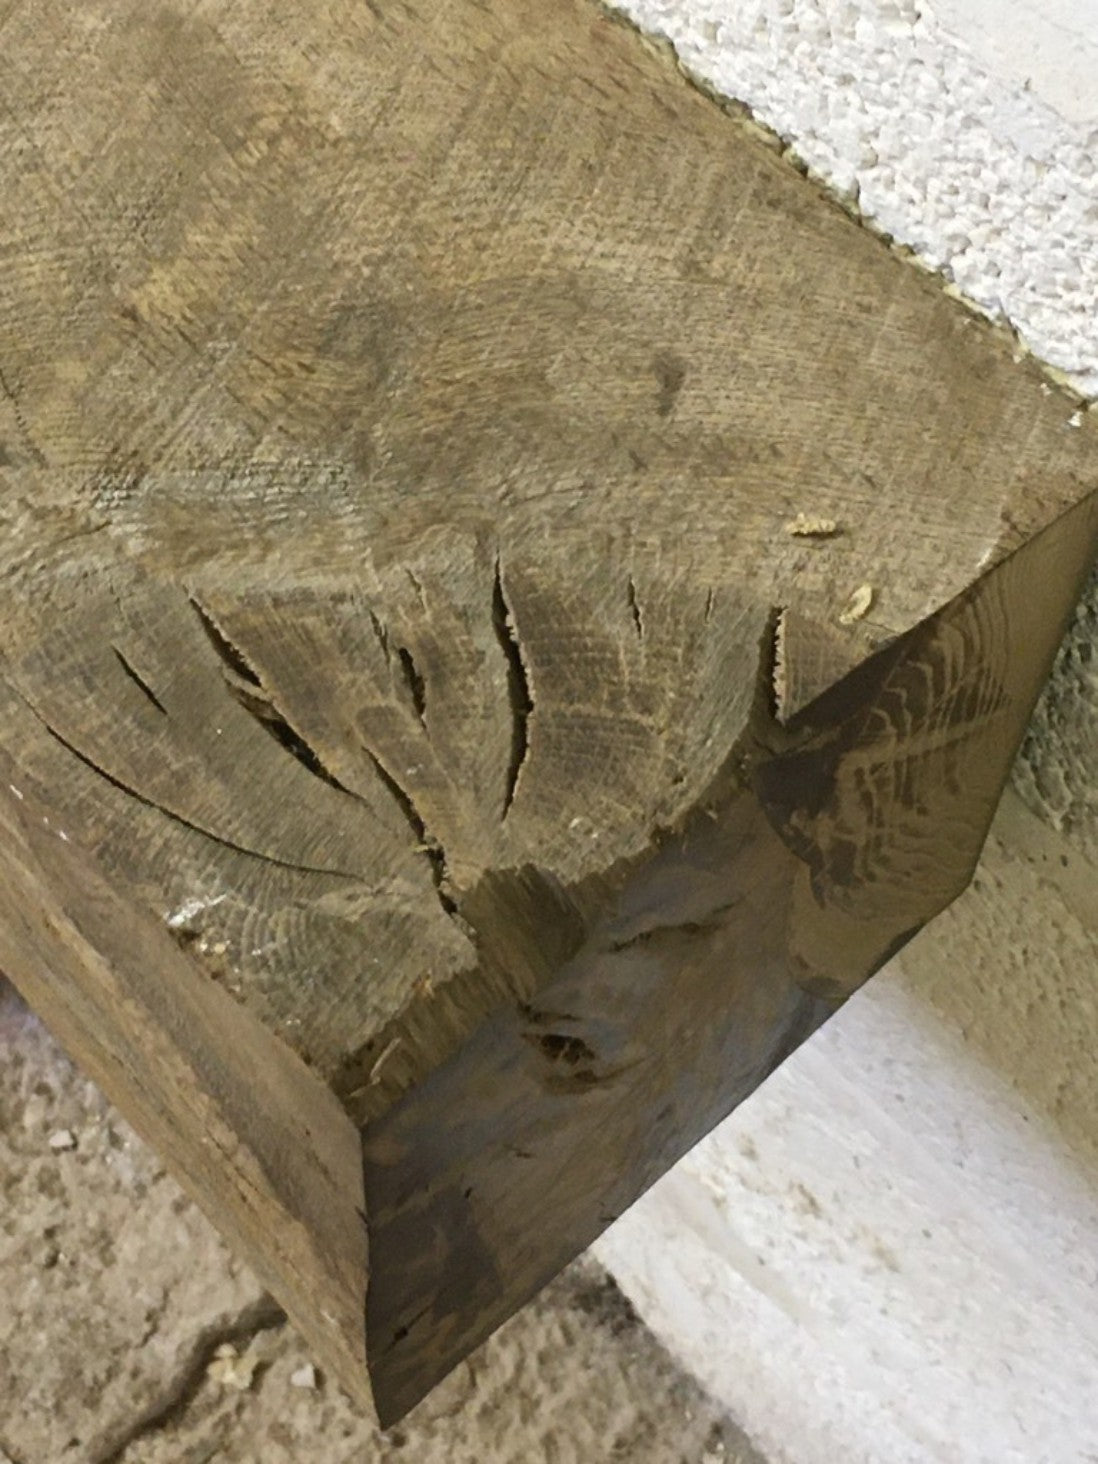 3ft 1 3/4" Or 96.2cm Long Reclaimed Old Rustic Oak Hardwood Timber Beam Shelf